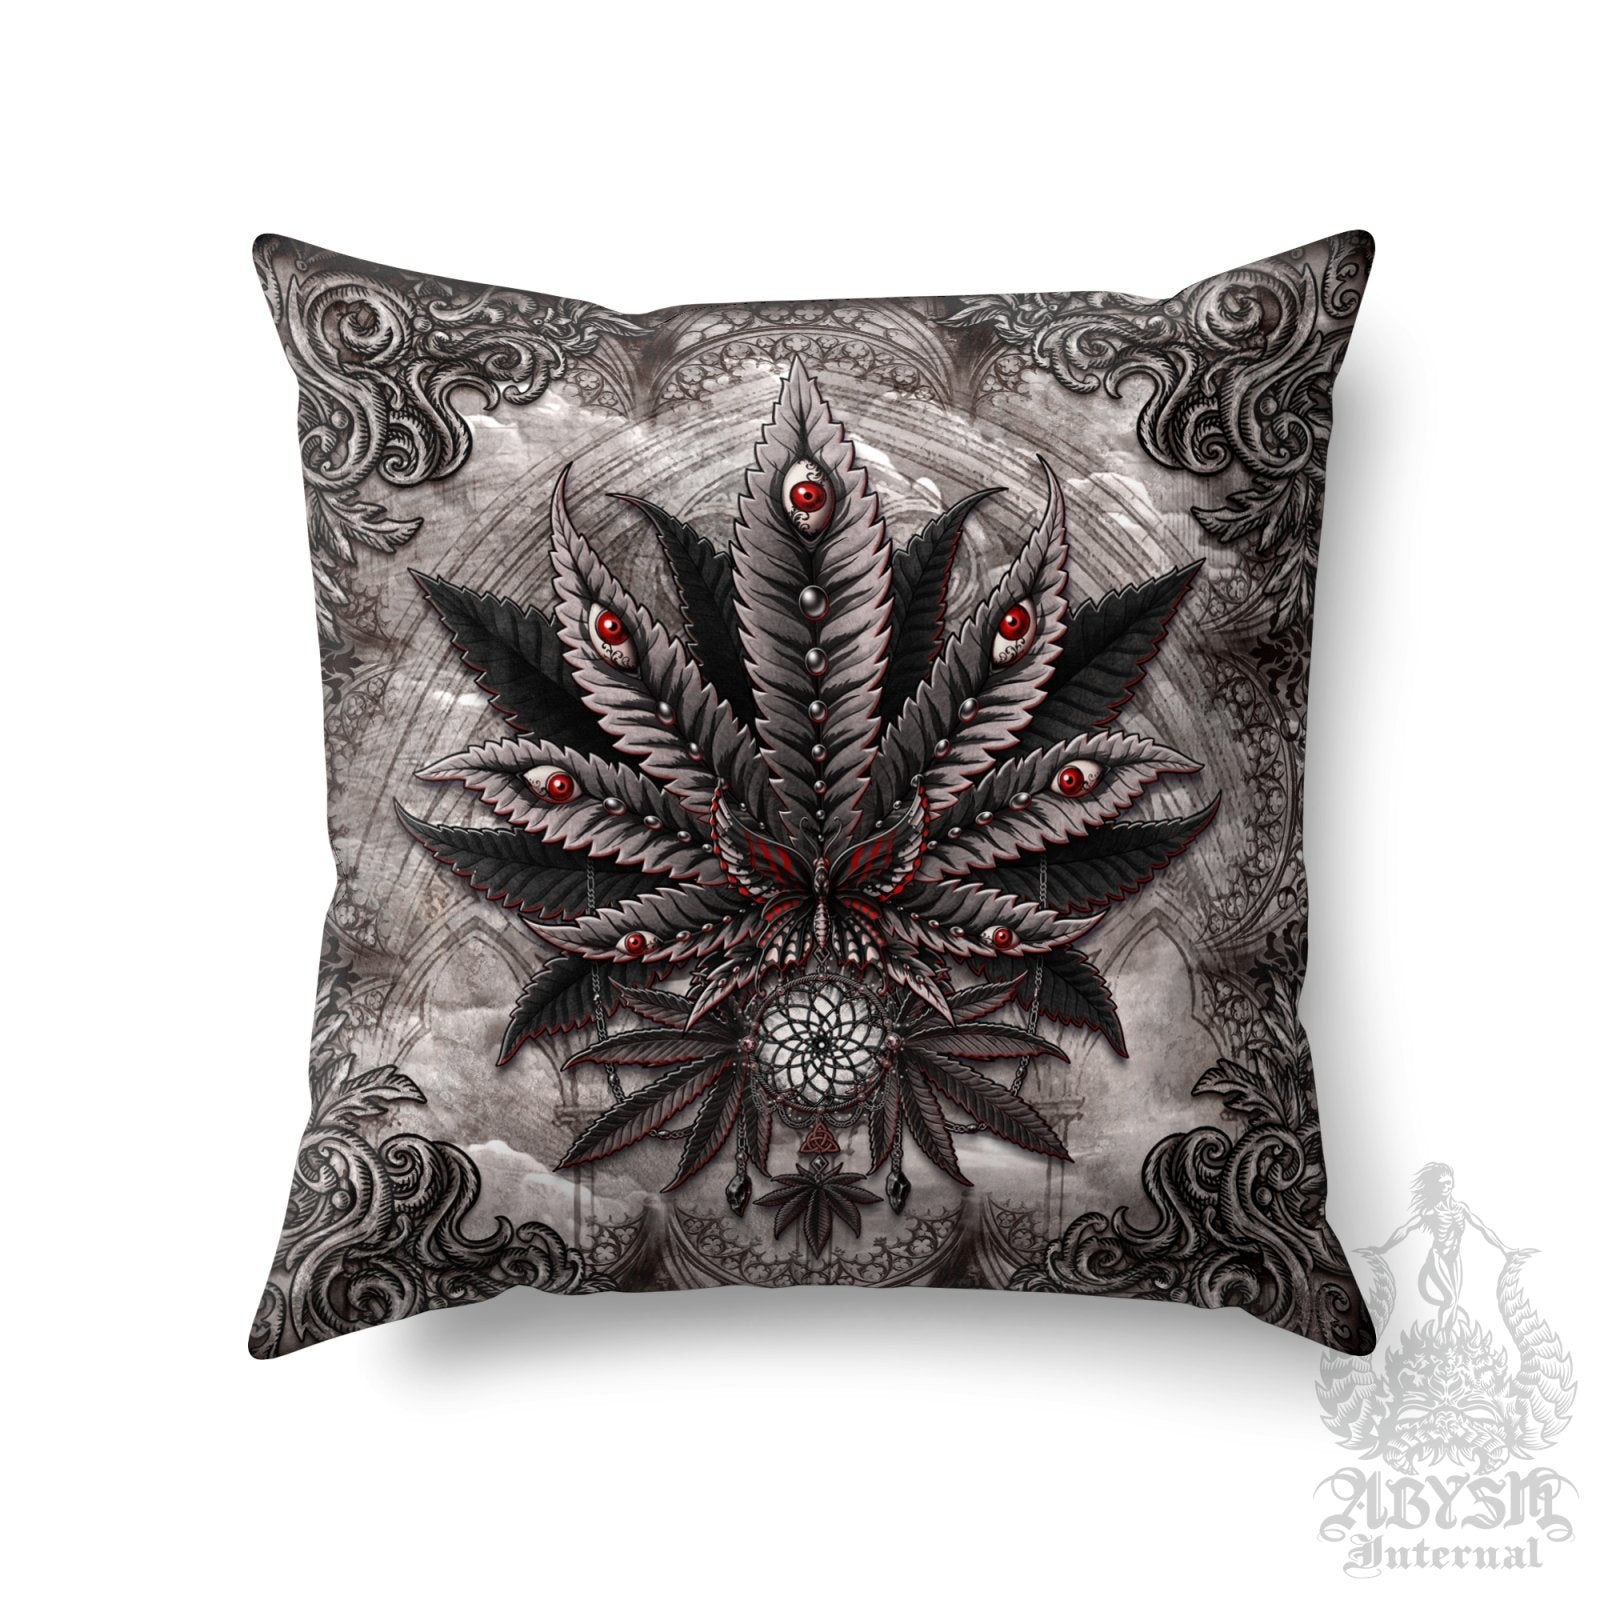 Gothic Weed Throw Pillow, Cannabis Shop Decor, Decorative Accent Cushion, Alternative Room Decor, 420 Art Print - Horror Grey - Abysm Internal